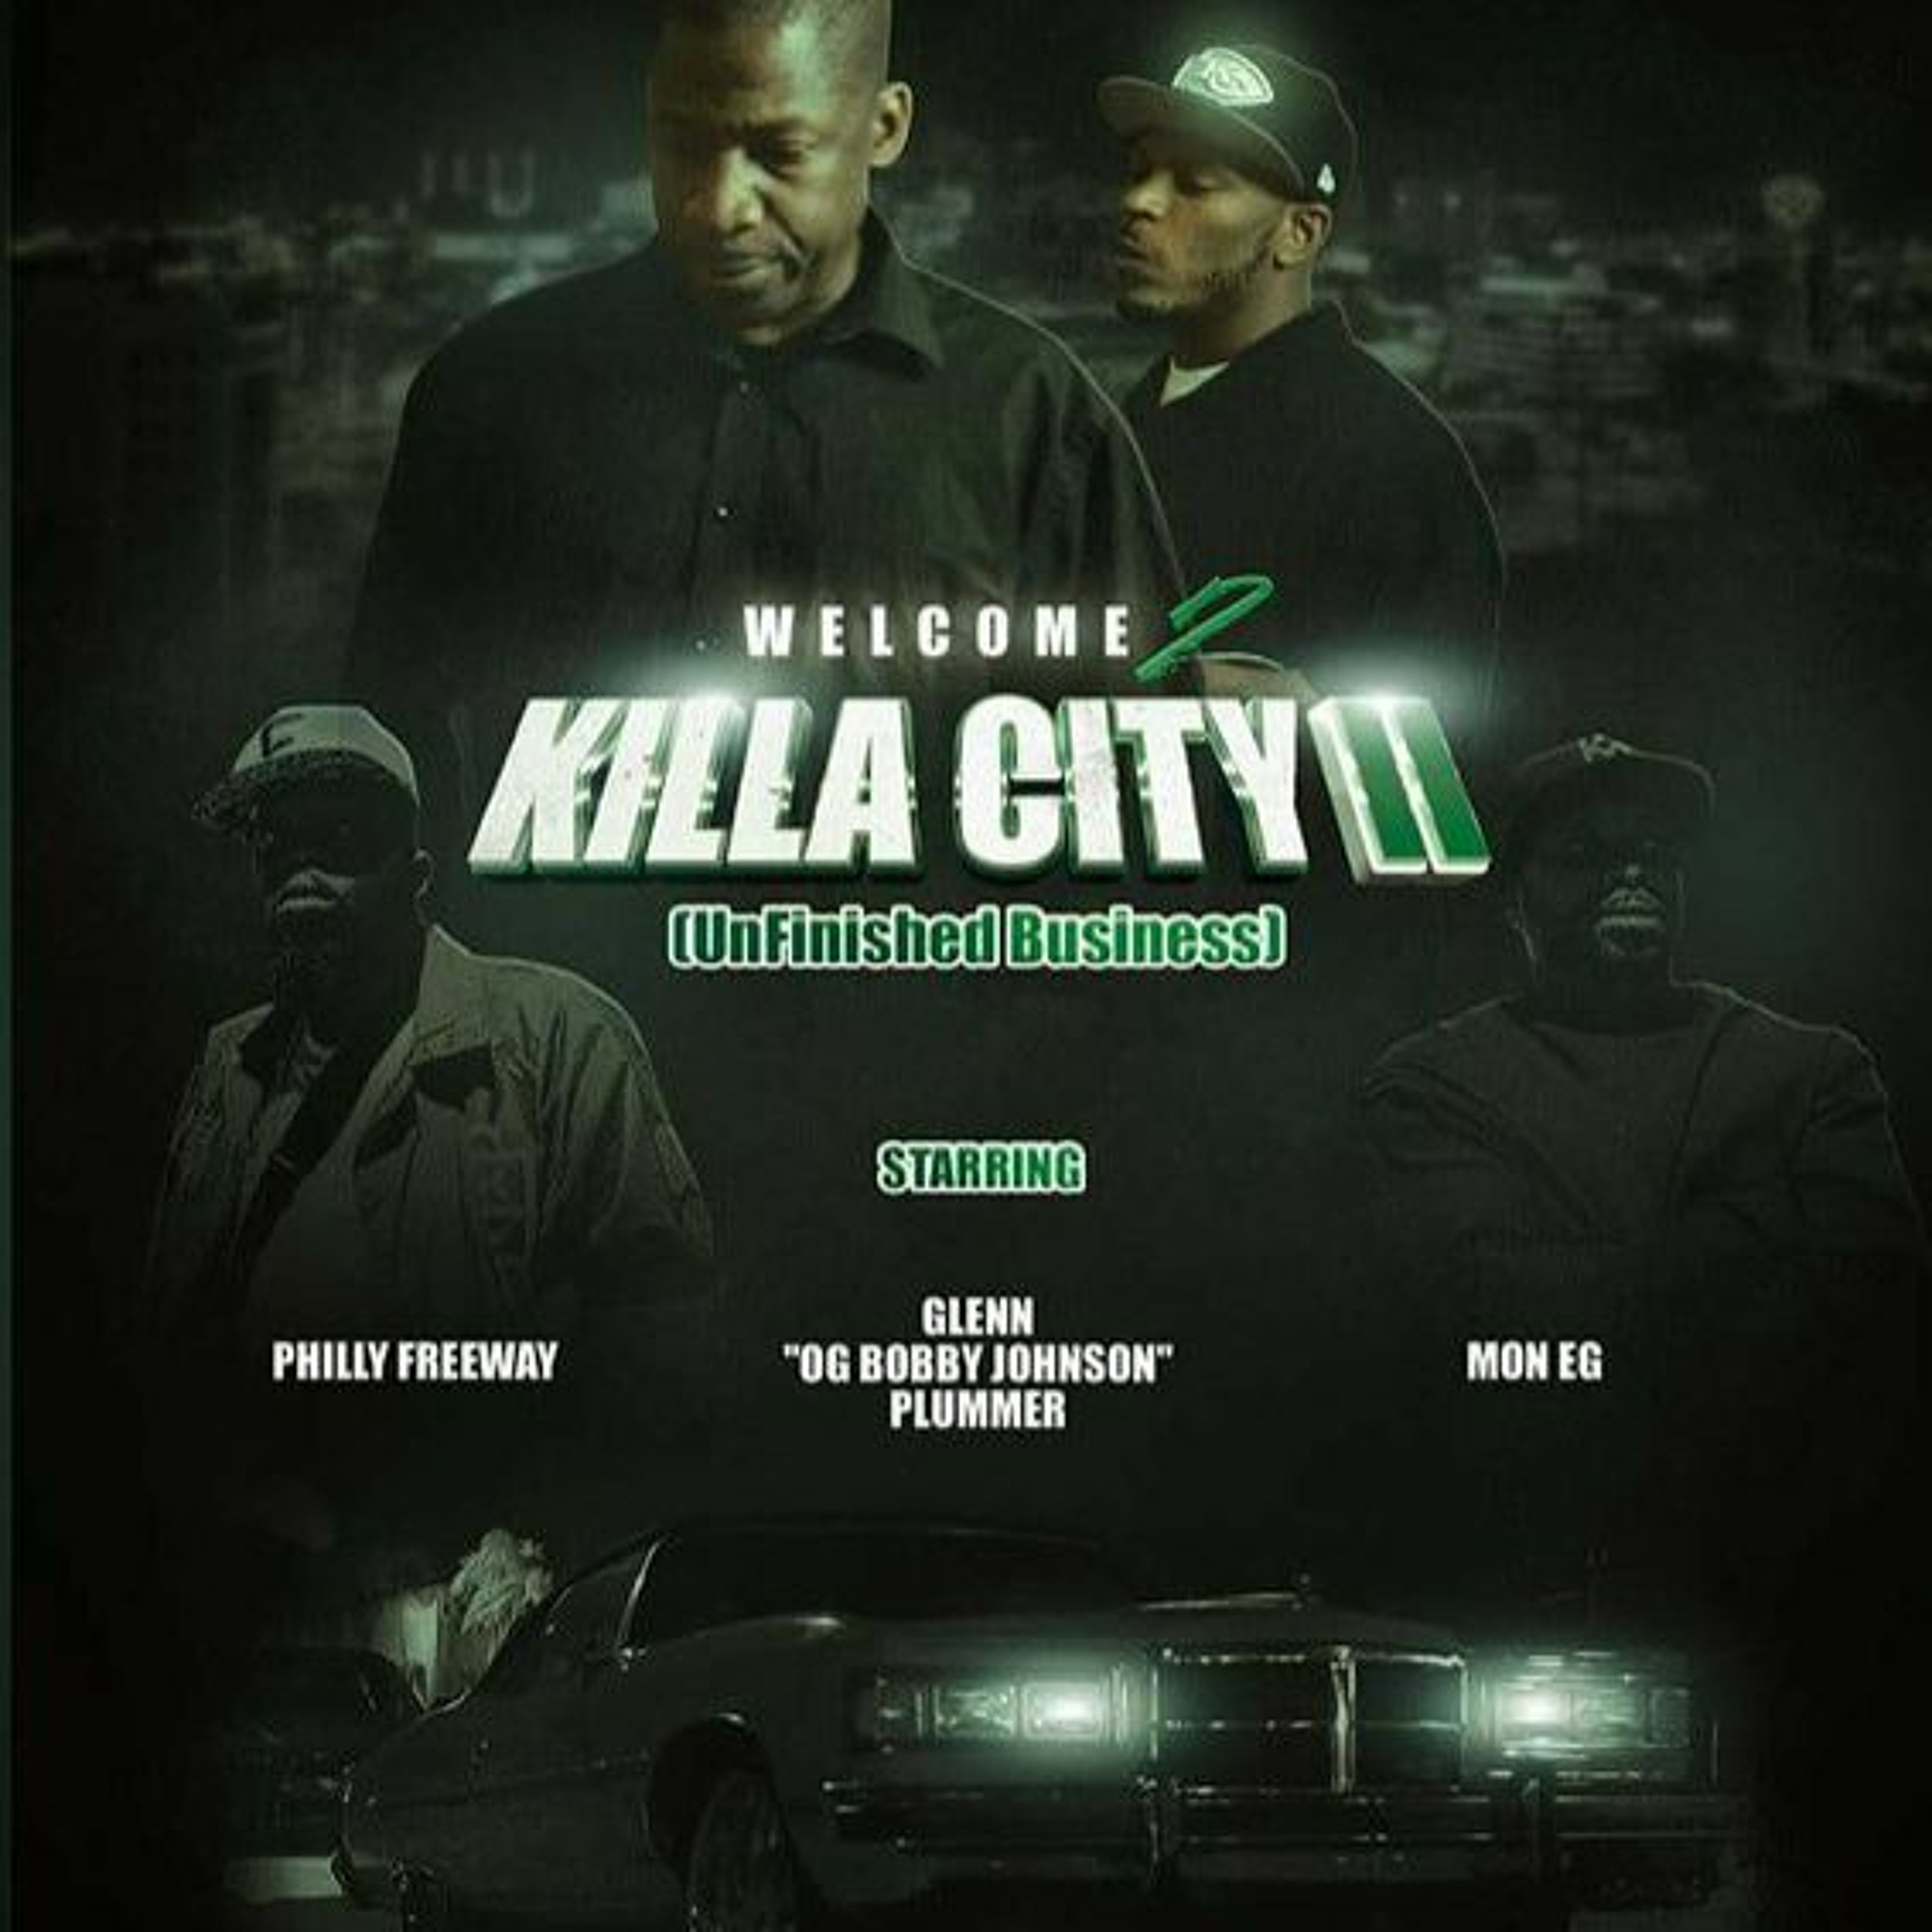 Hood Movie Sessions Ep.4 Welcom 2 Killa City II Unfinished Business Image